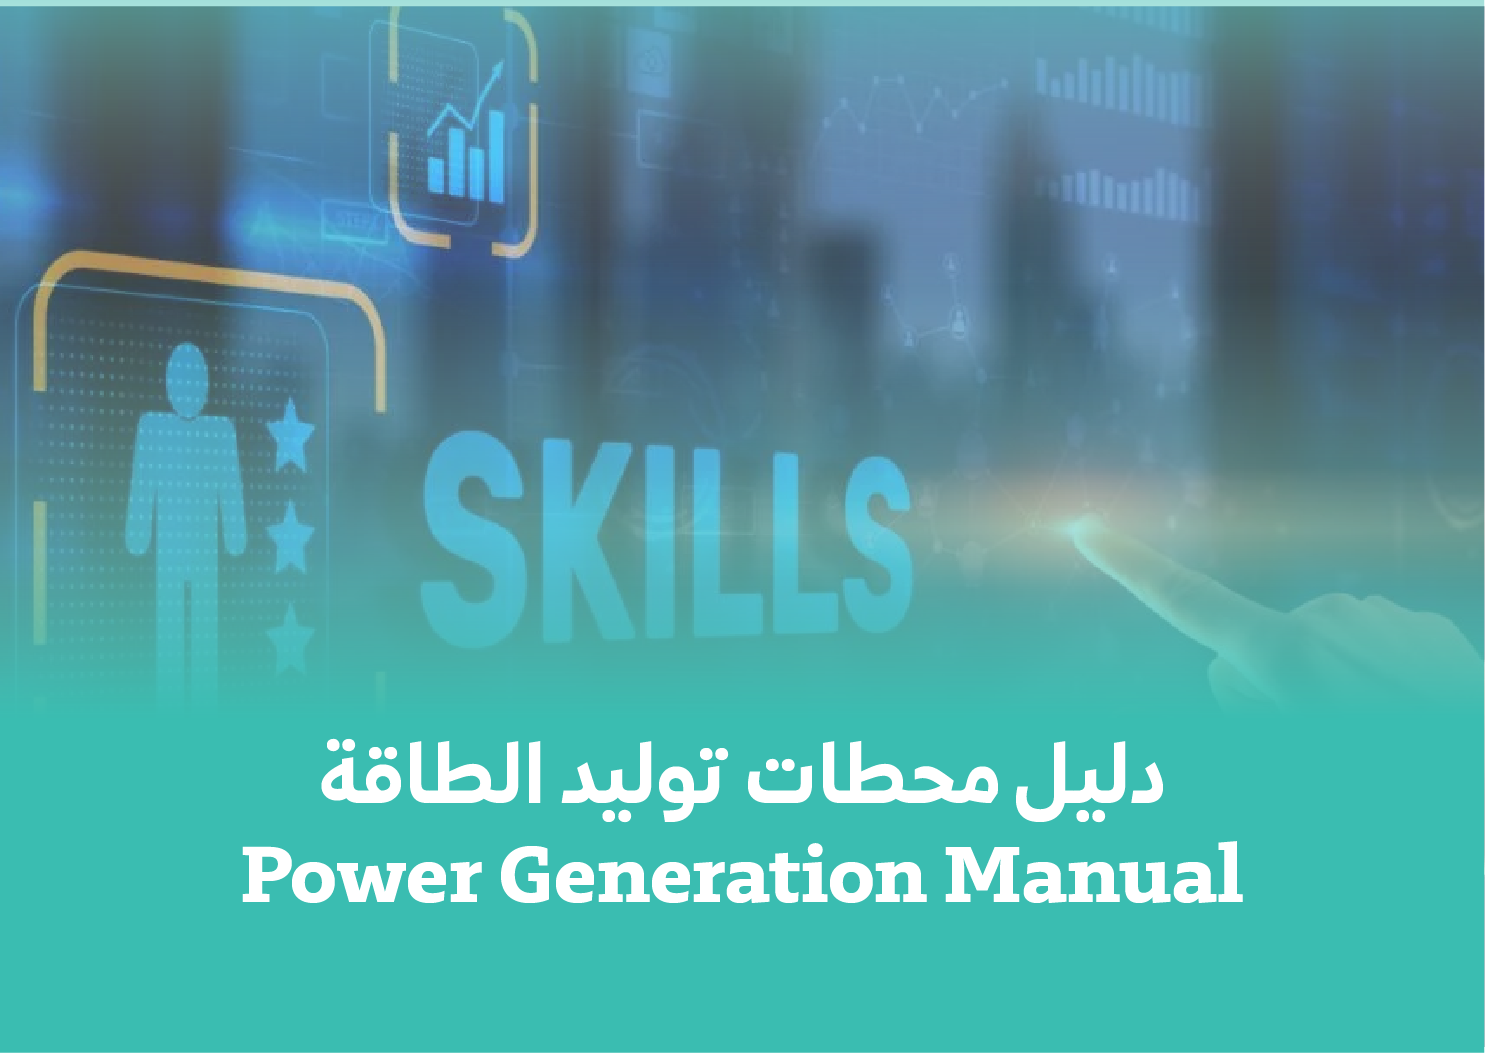 Power Generation Manual